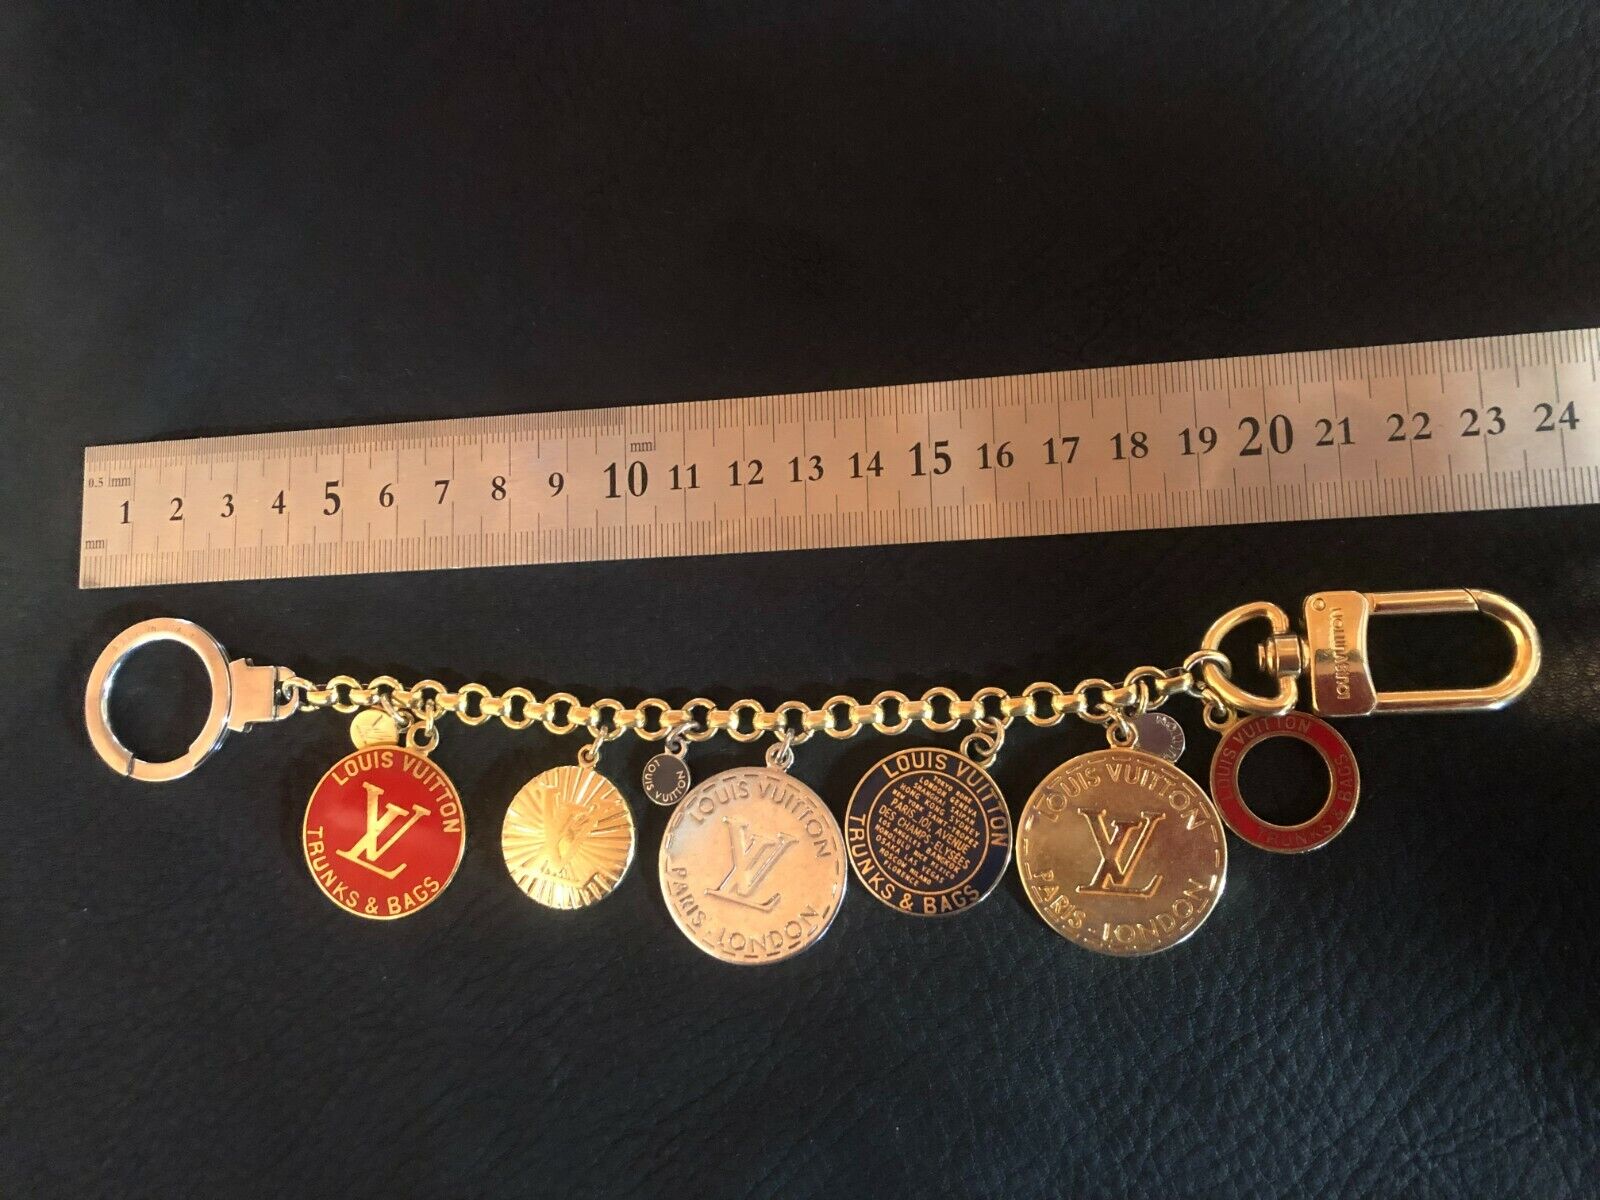 LV coins purse,Key Chain, Key Ring, Coin bag, Ky Holder, handbag